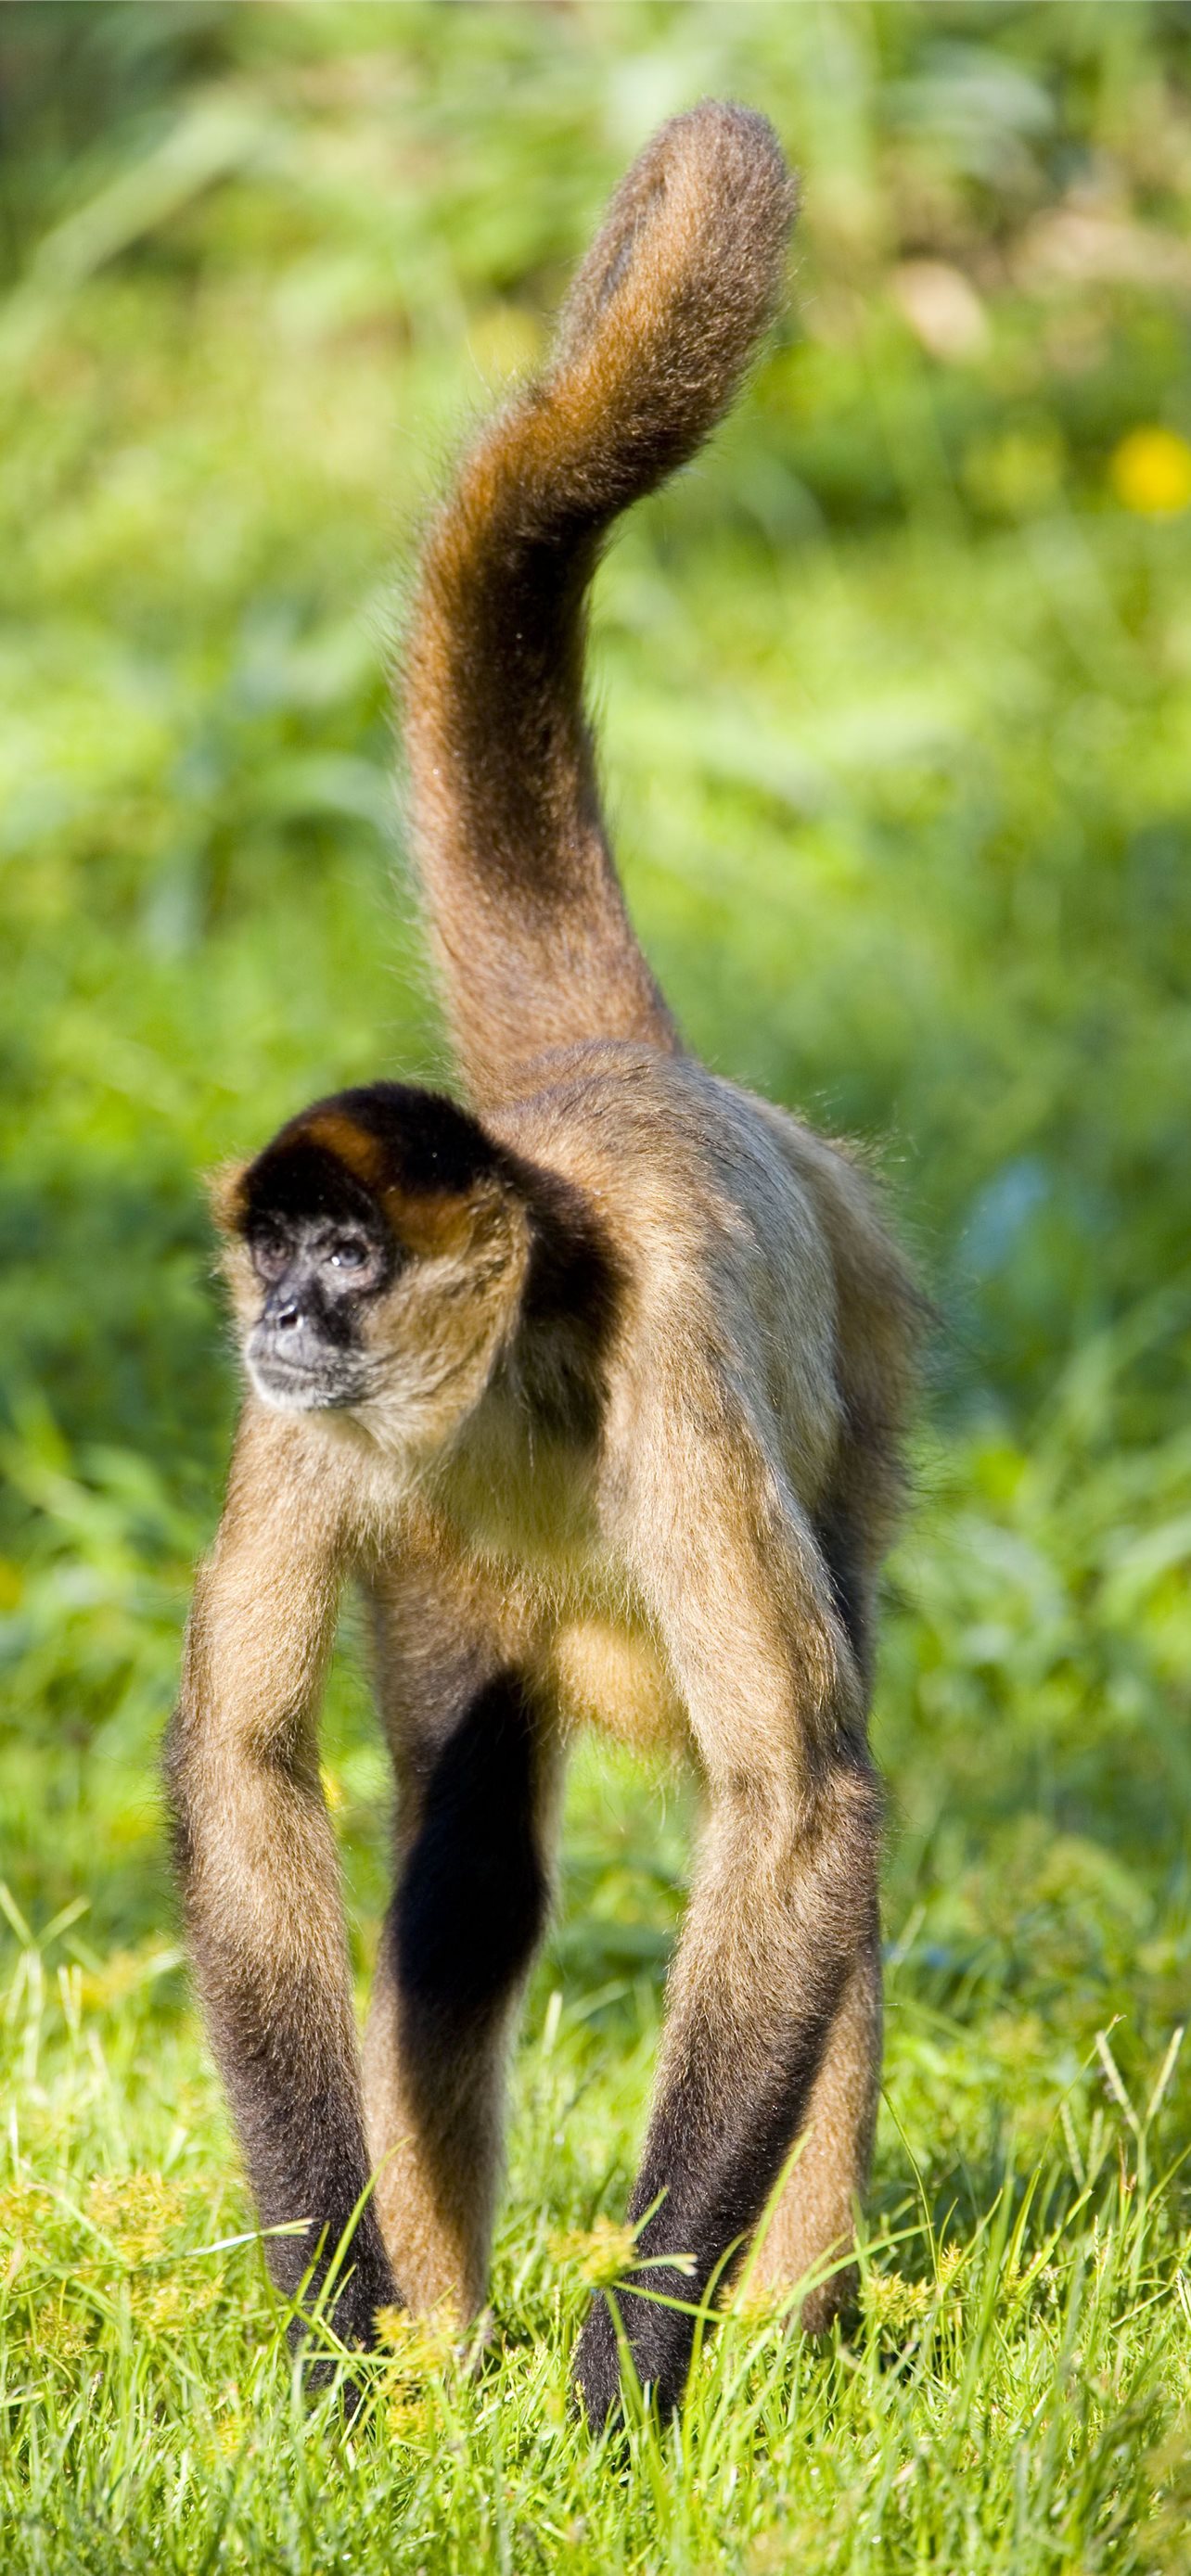 Wallpaper monkey monkeys monkey monkeys primates Gibbon primates gibbon  images for desktop section животные  download